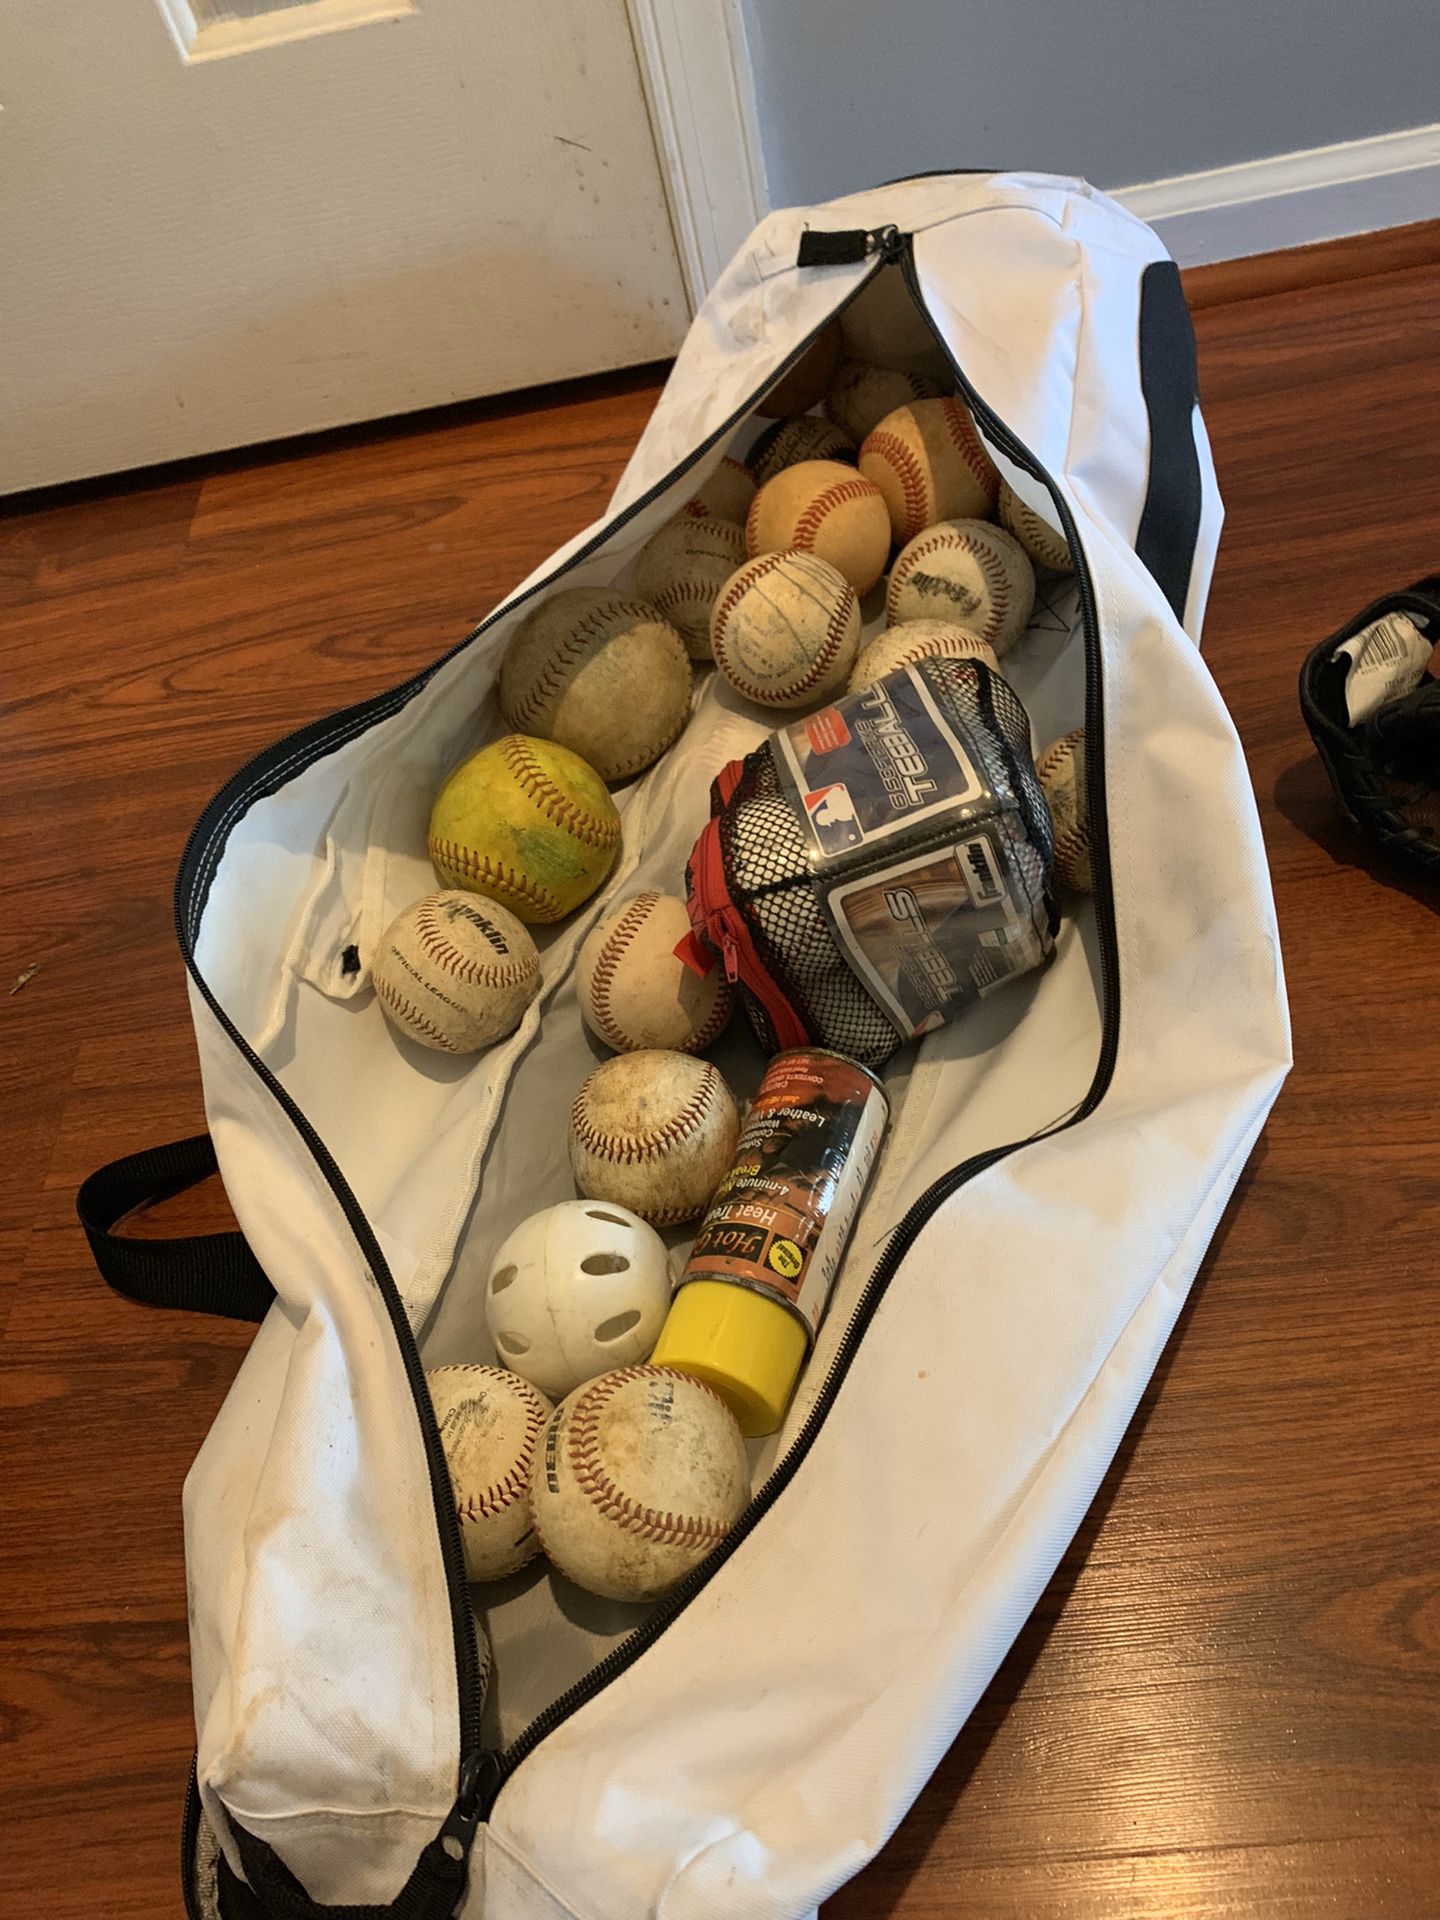 Baseball items